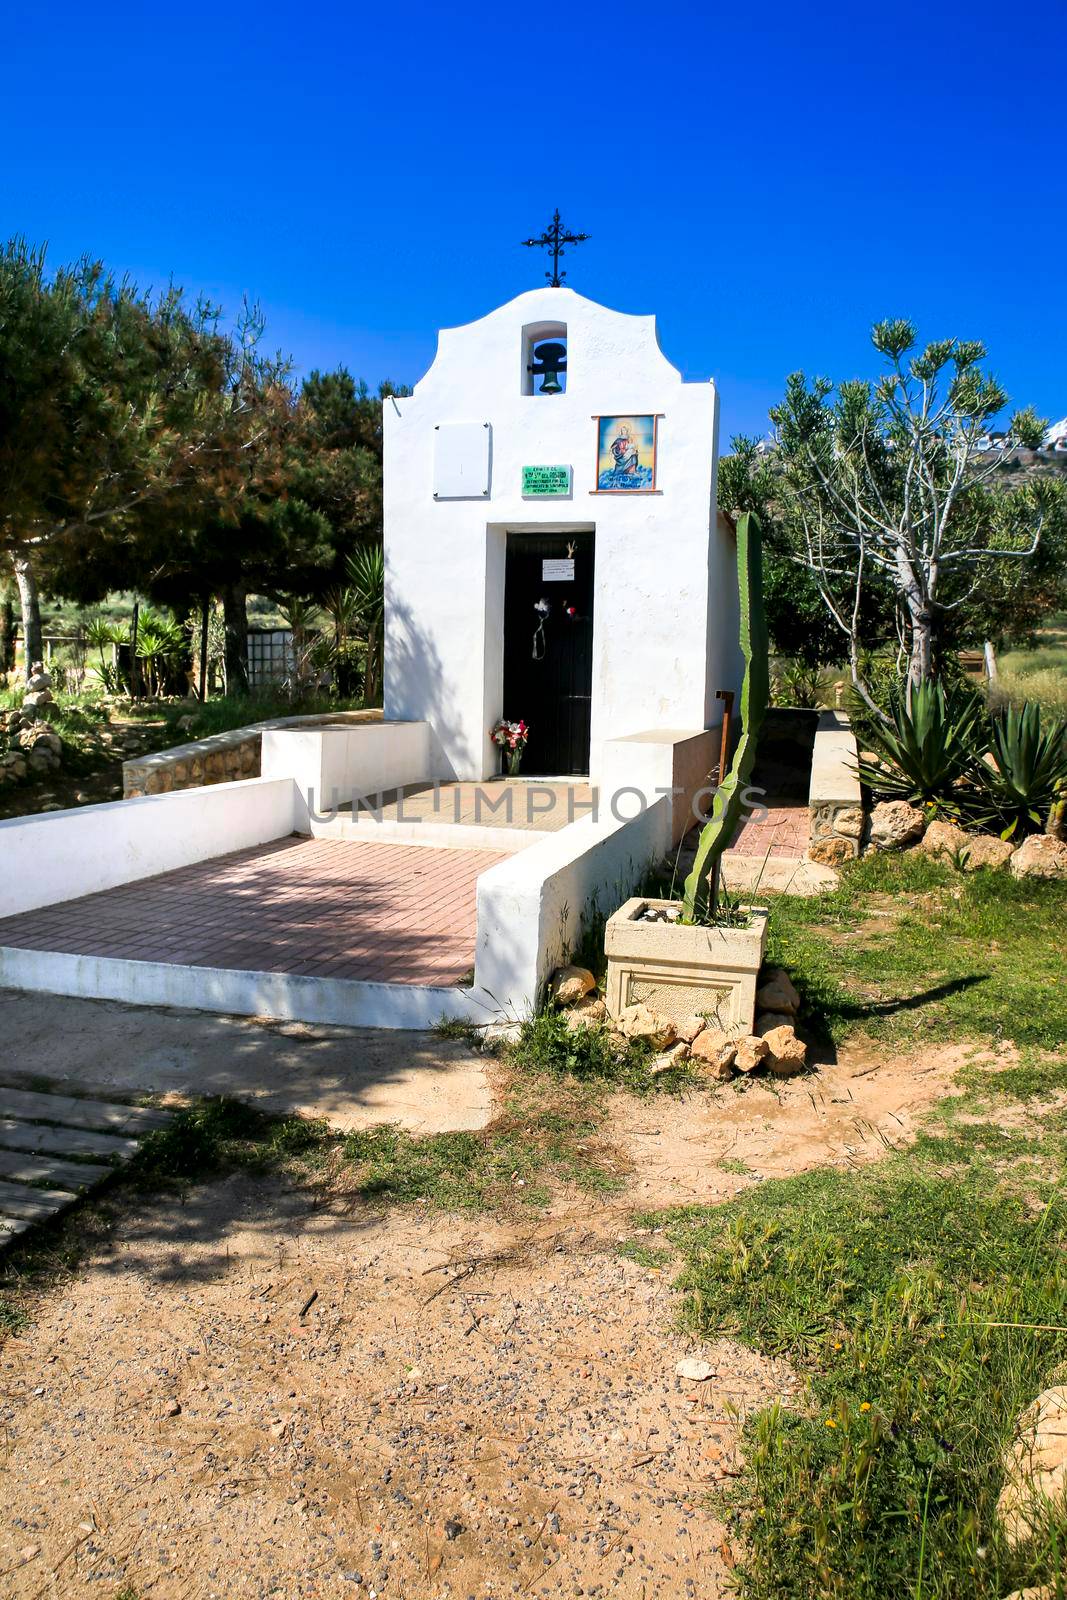 Hermitage of the Santa Pola Lighthouse seascape by soniabonet